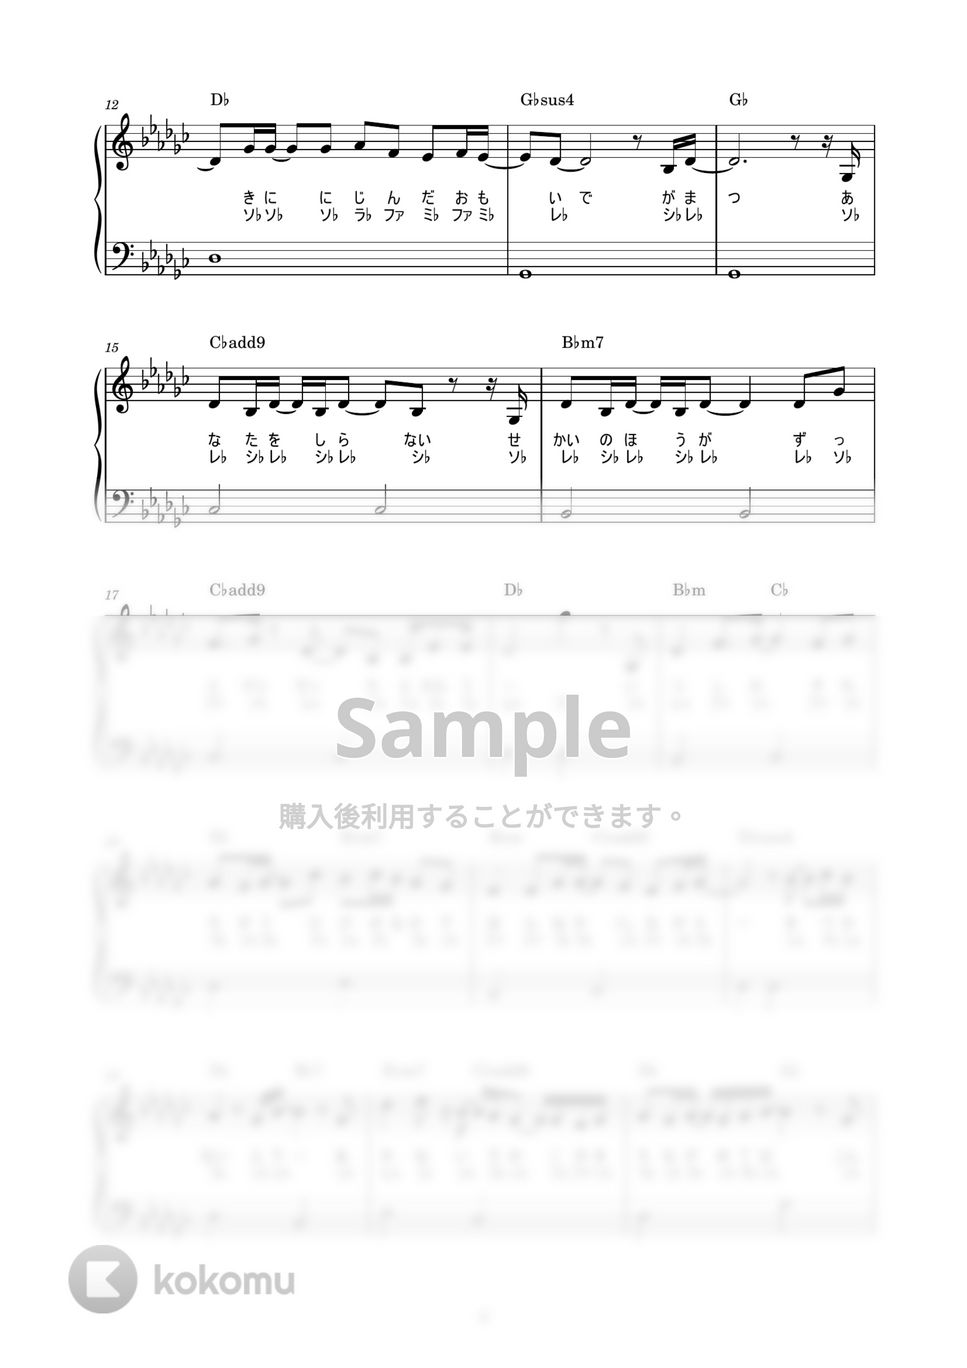 Novelbright - ツキミソウ (かんたん / 歌詞付き / ドレミ付き / 初心者) by piano.tokyo